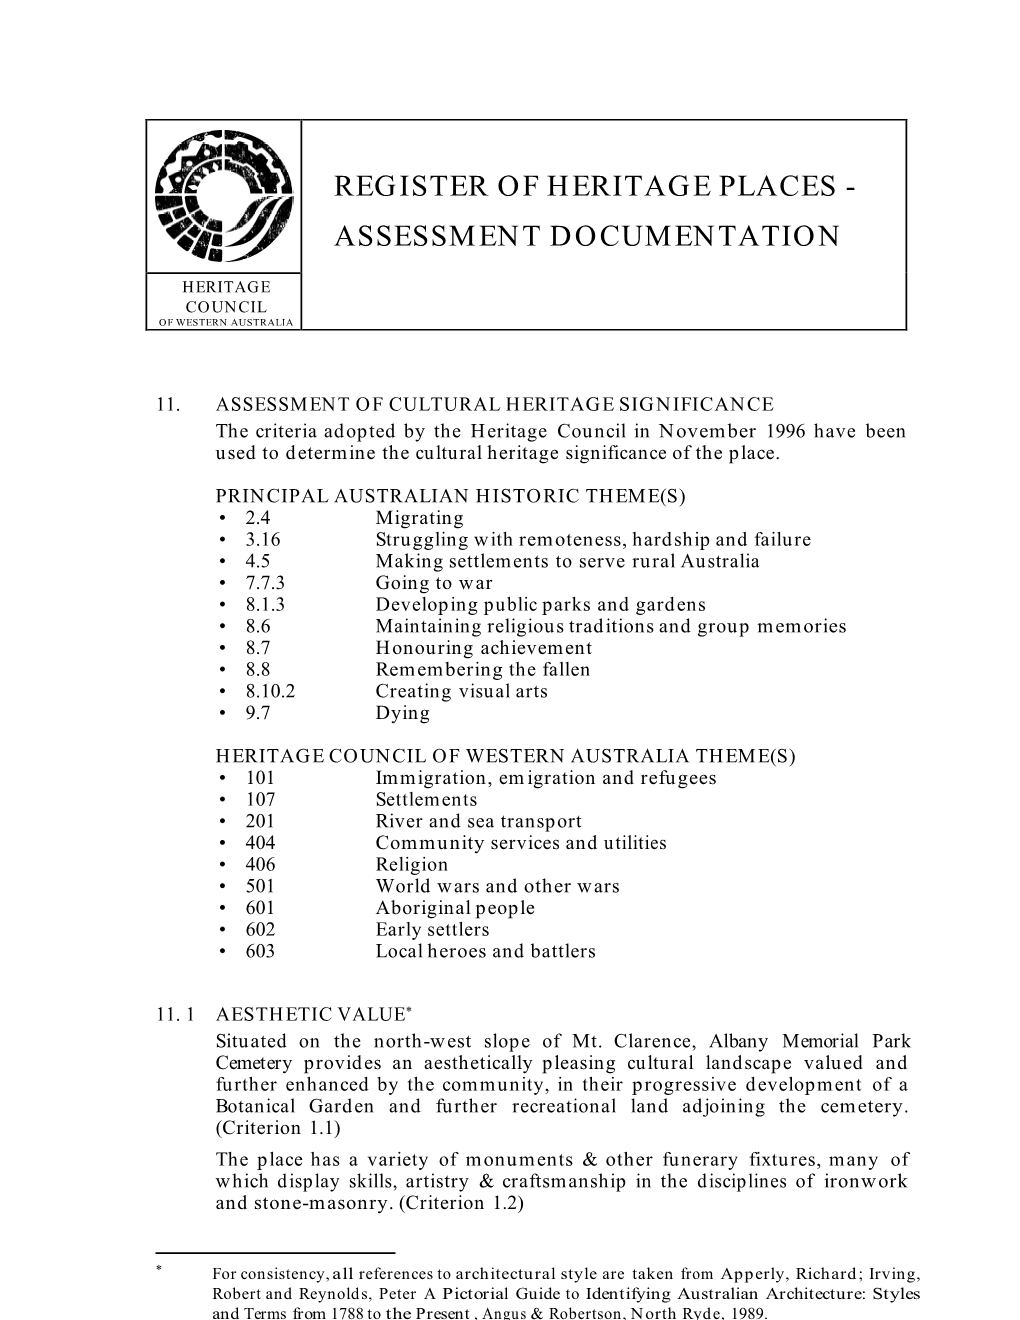 Register of Heritage Places - Assessment Documentation